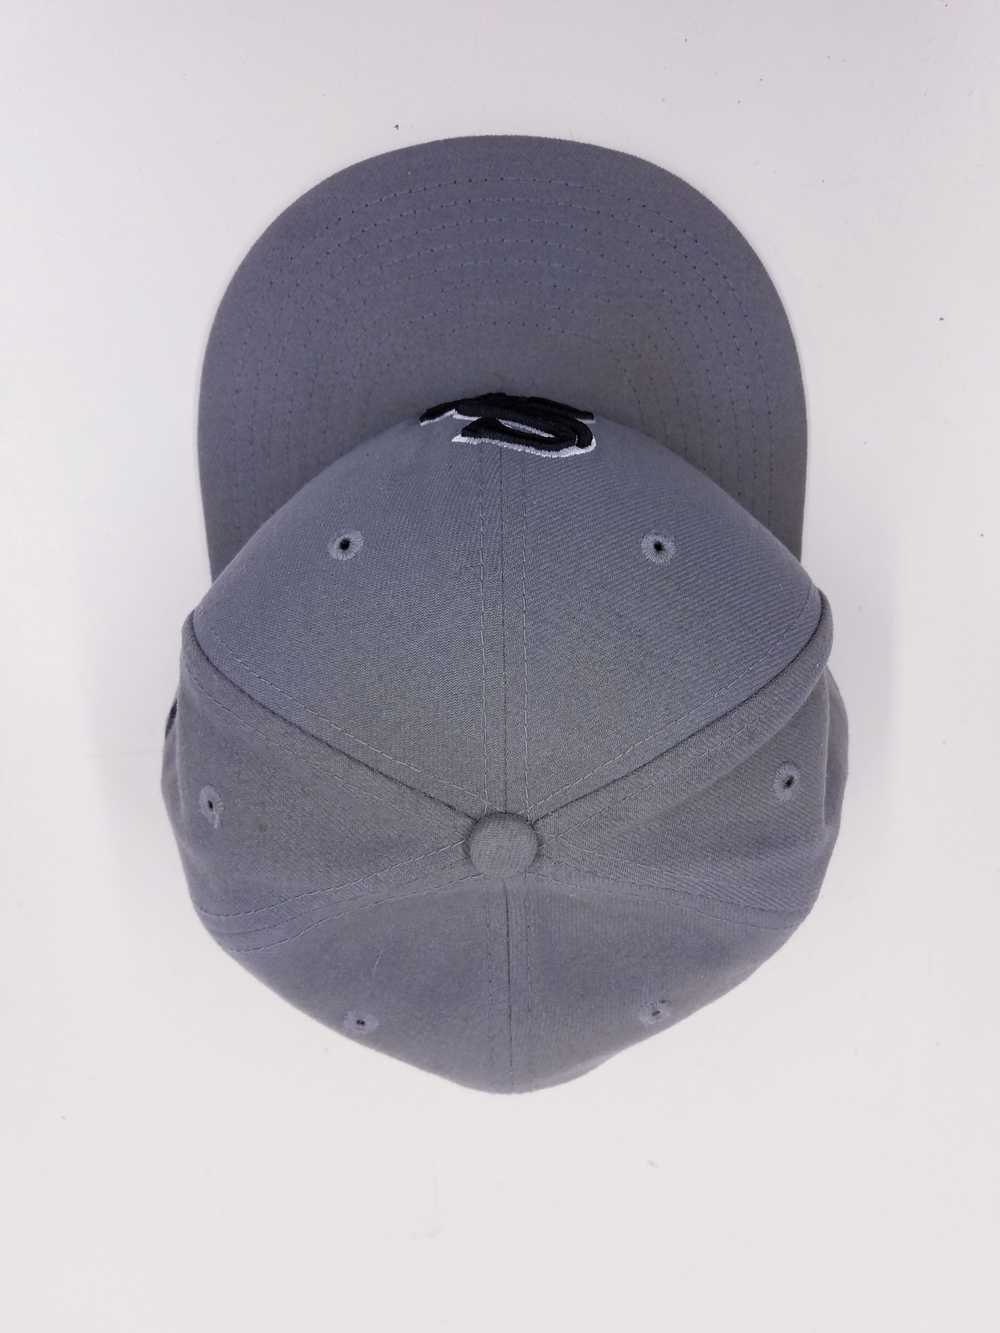 Bundle of 2 New Era Chicago White Sox Men's Hats - image 7